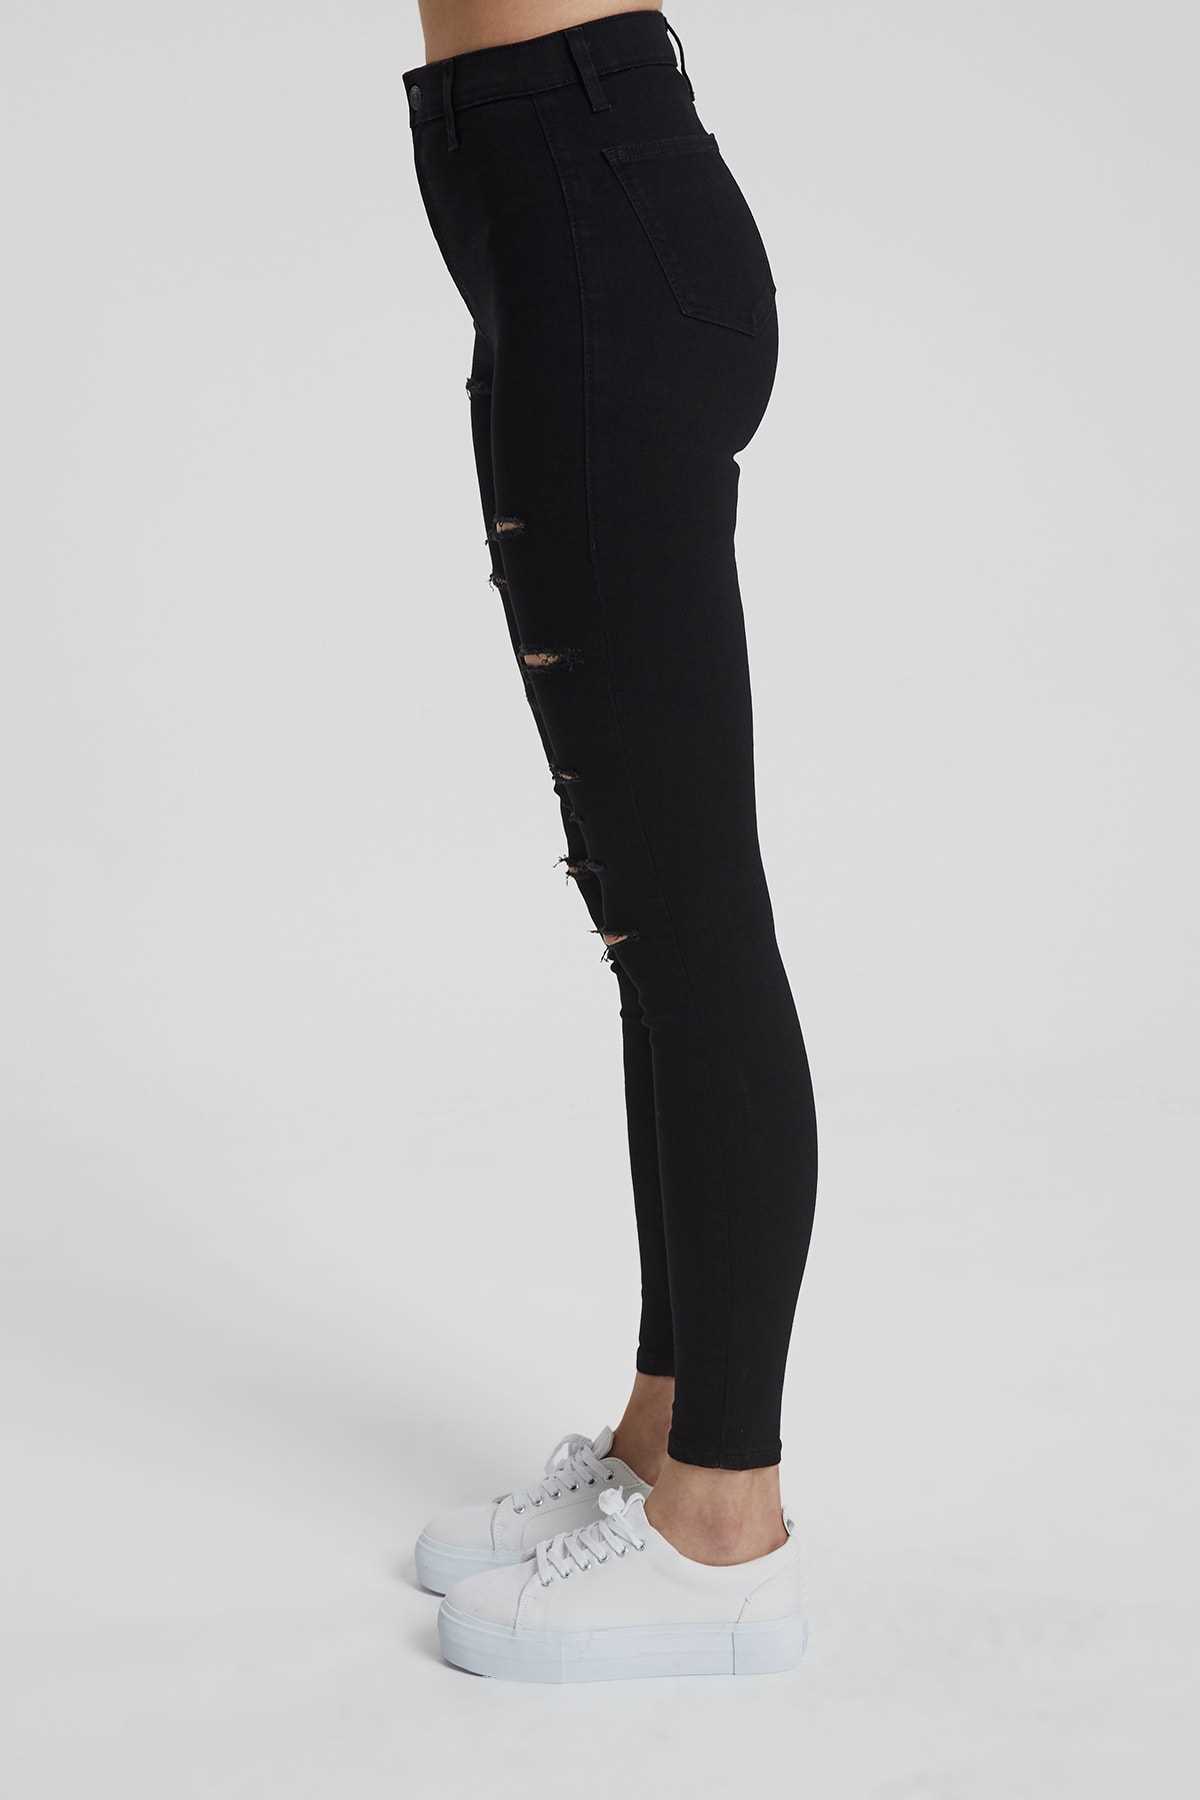 خرید انلاین شلوار جین جدید زنانه شیک برند CROSS JEANS رنگ مشکی کد ty72664785